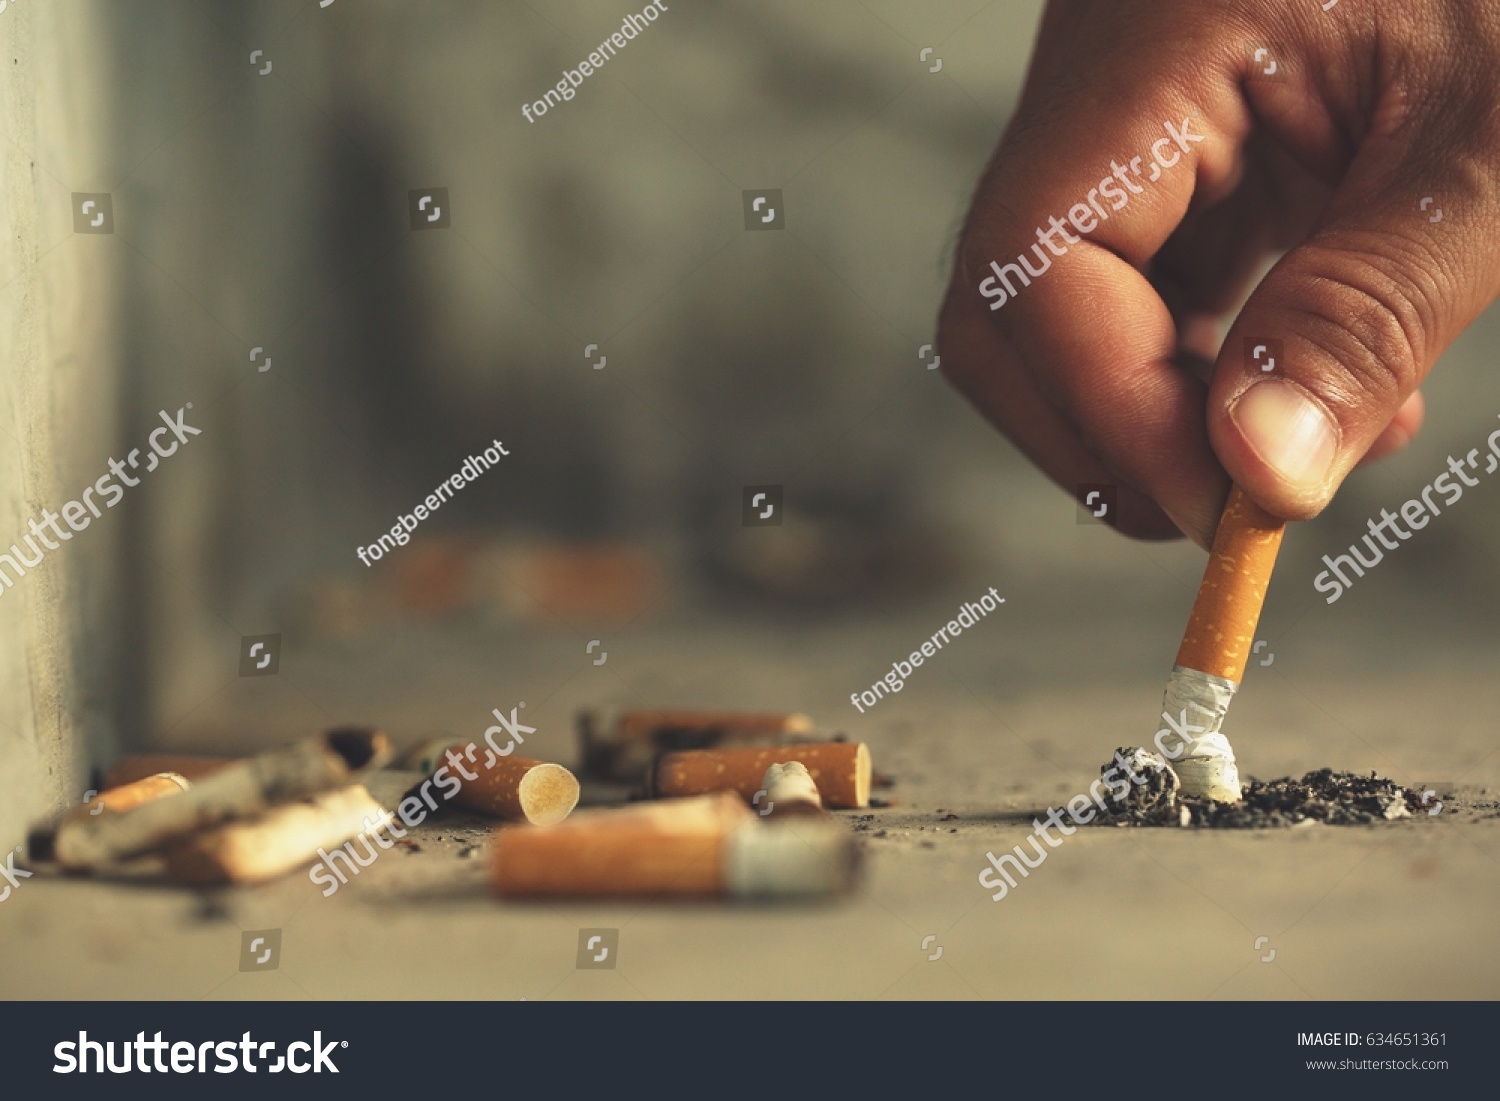 Hand putting out a cigarette,cigarette butt on Concrete floor, bare cement. #634651361